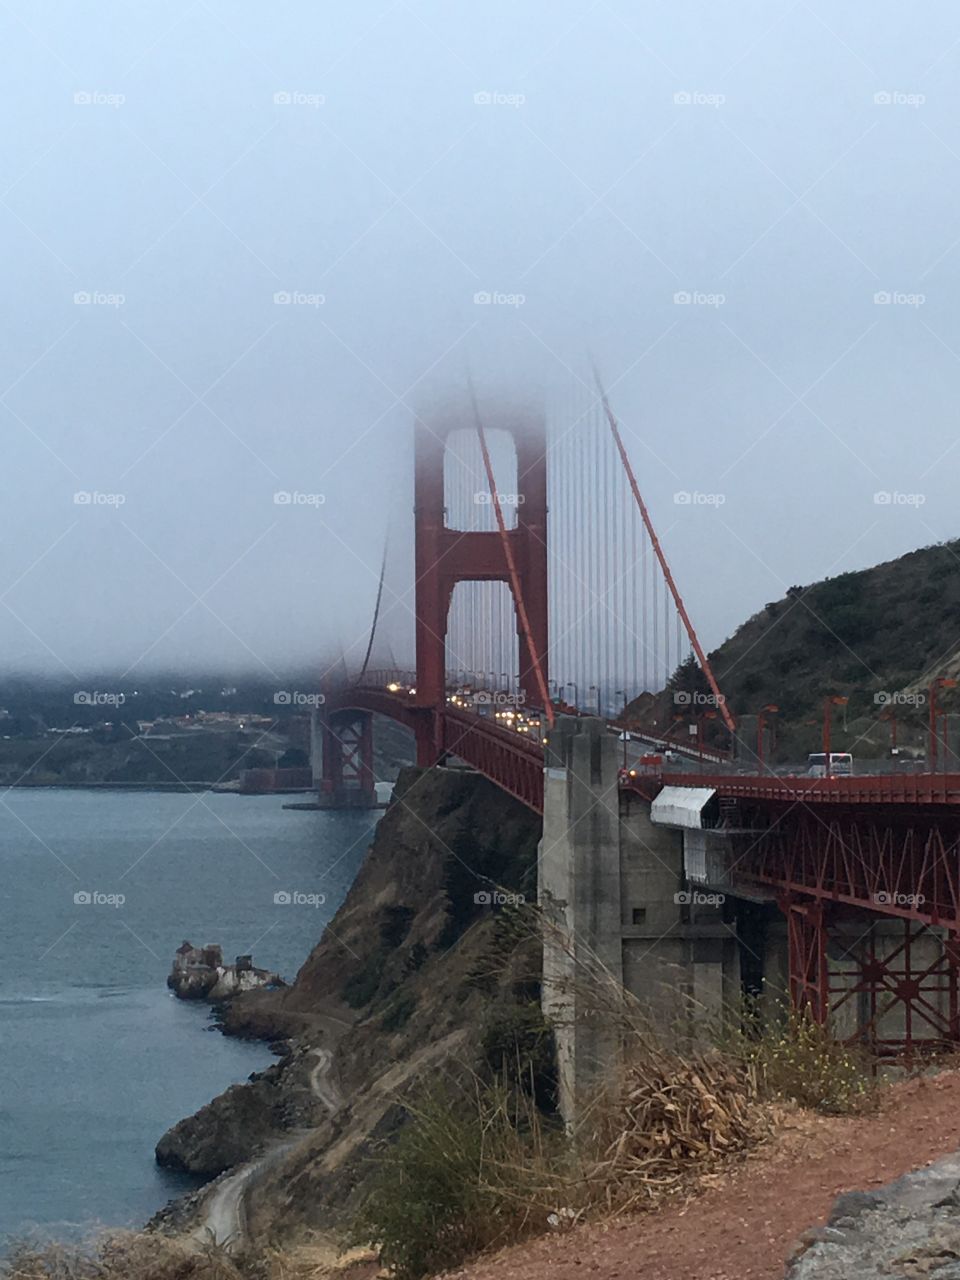 San Francisco's foggy Golden Gate Bridge in August